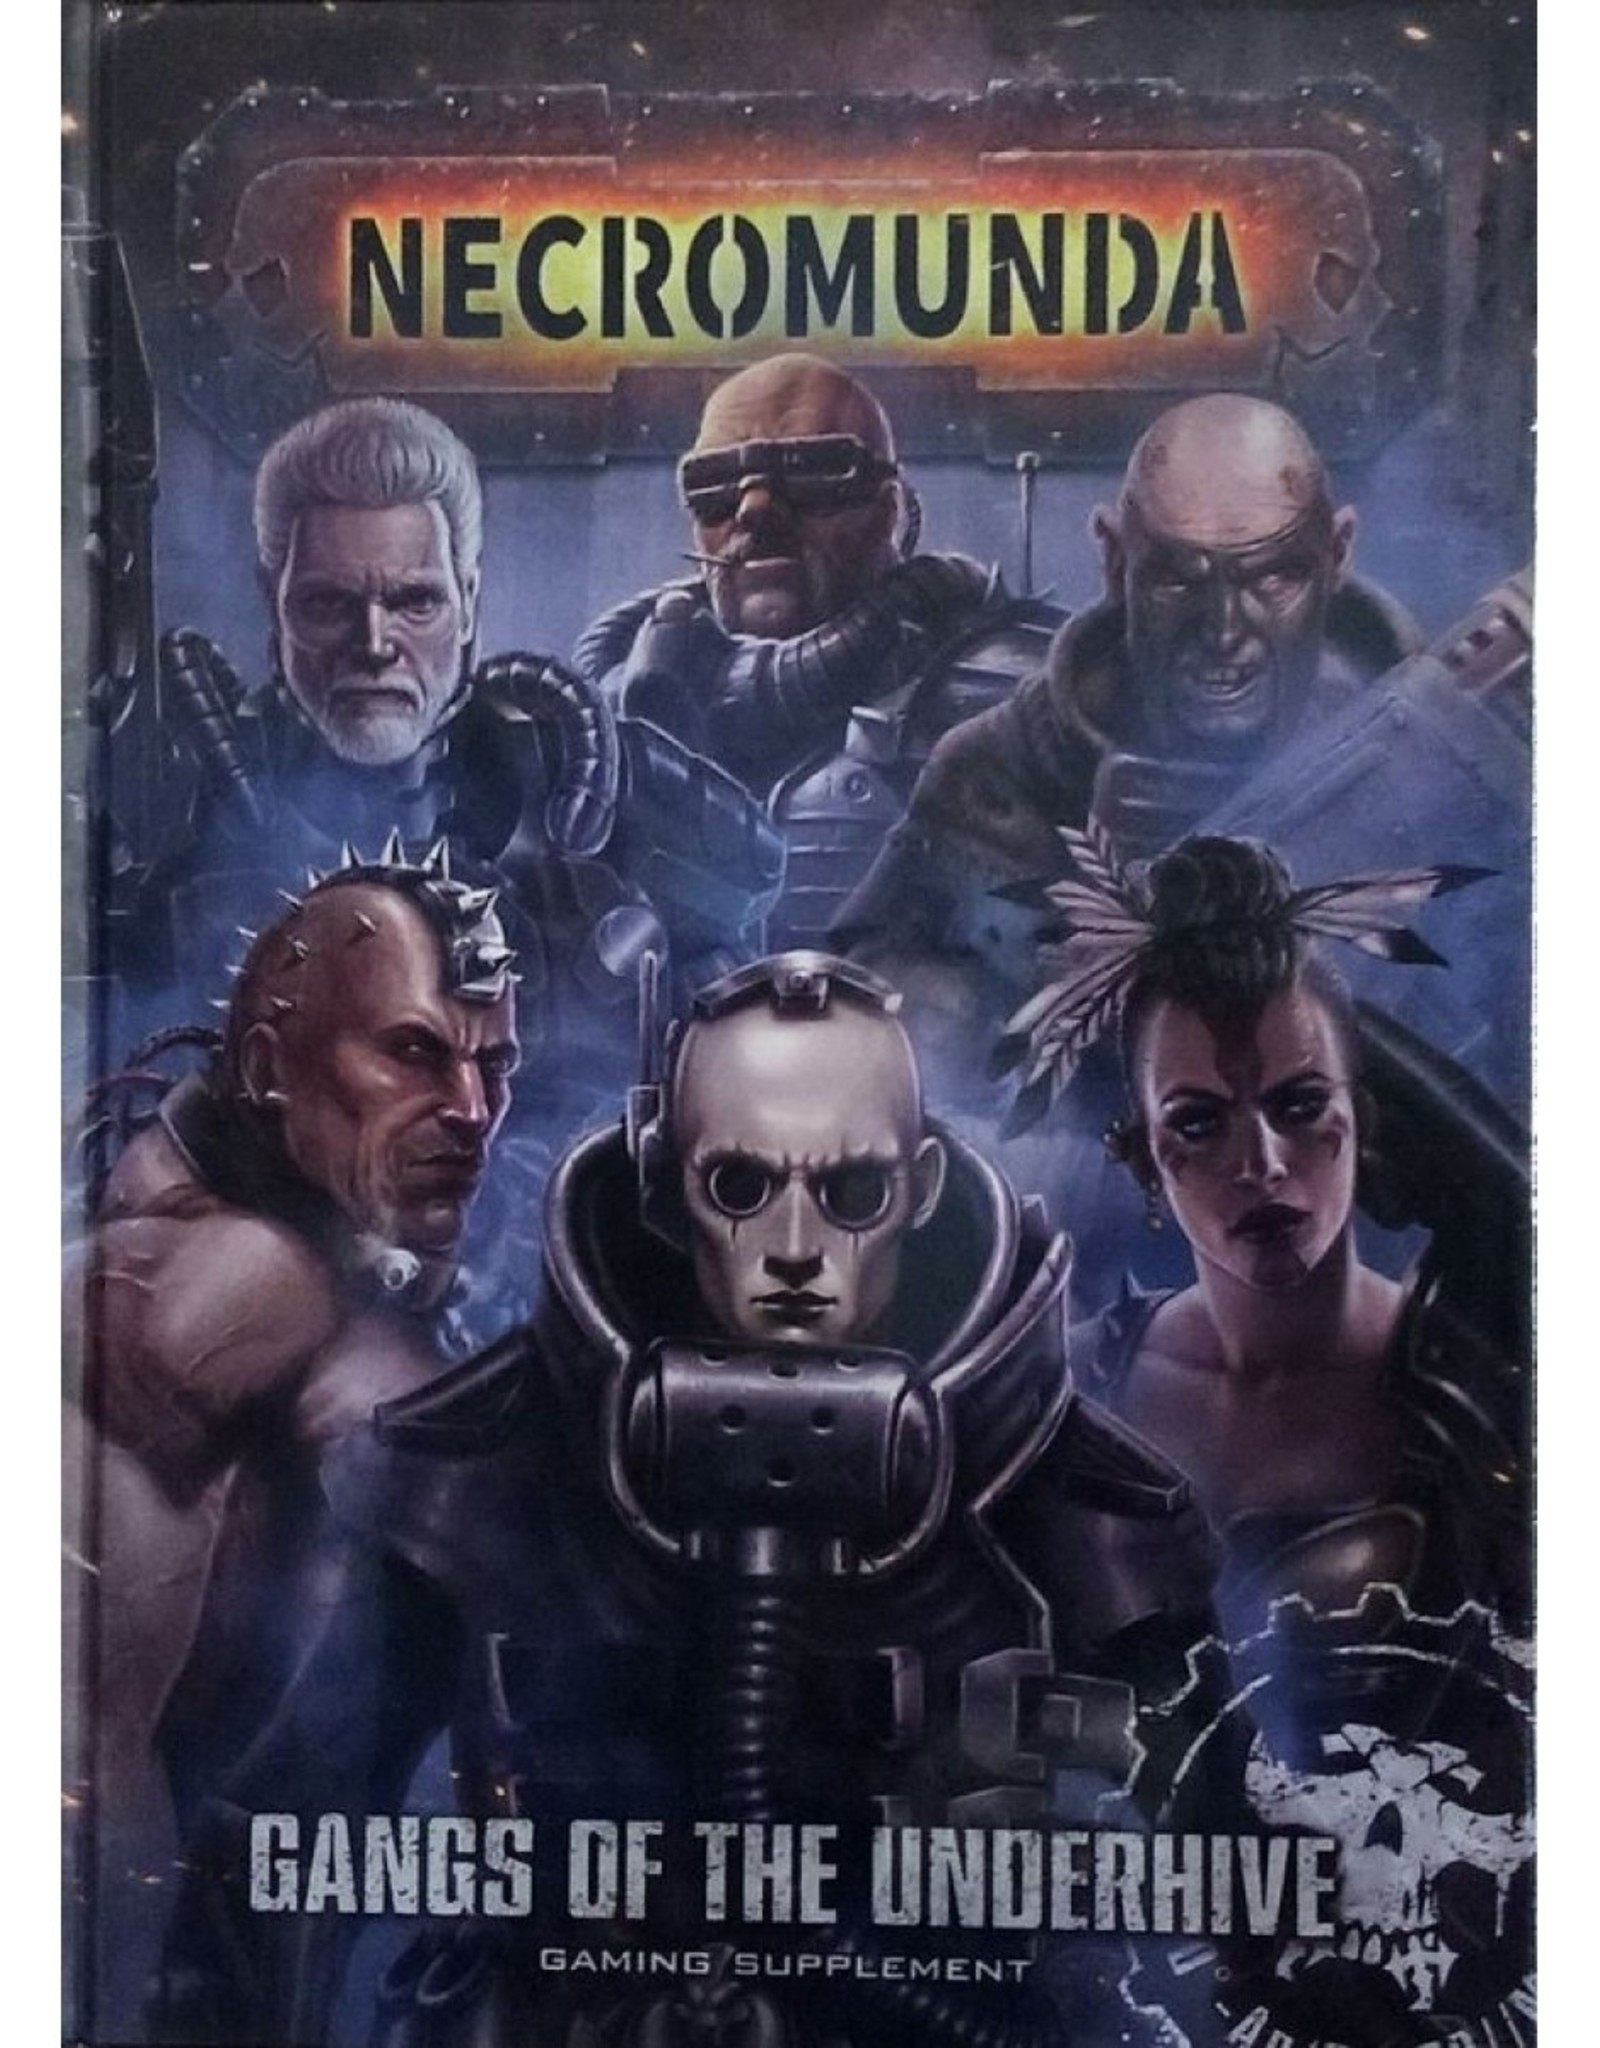 Games Workshop Necromunda: Gangs of the Underhive